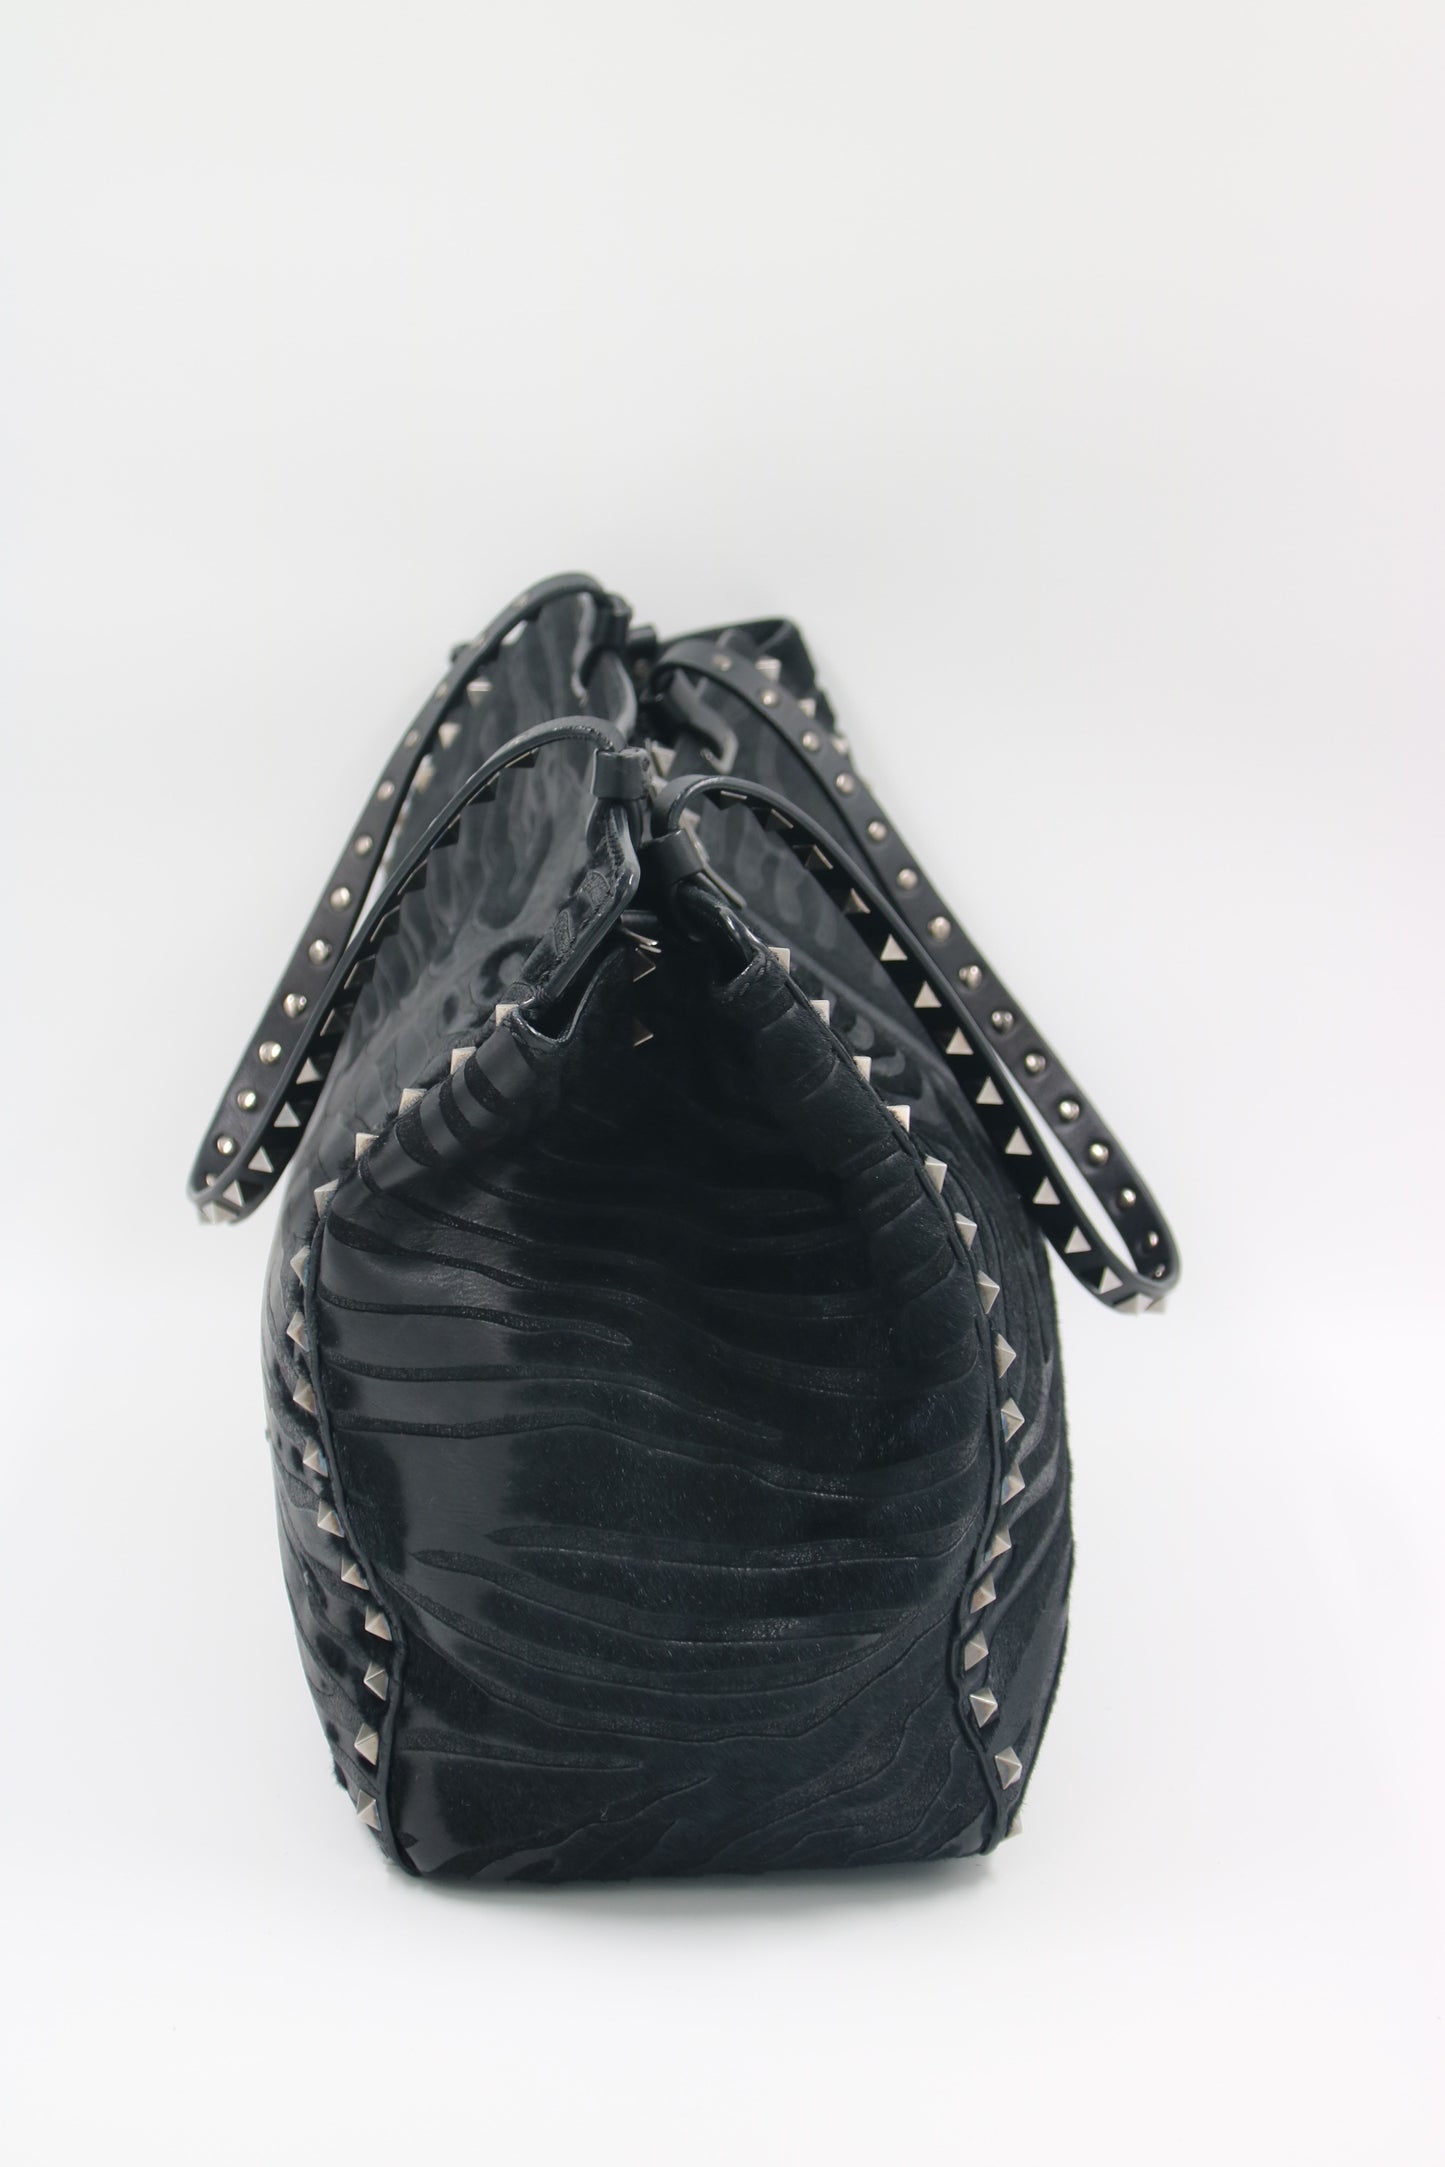 VALENTINO Noir Calf Hair Rockstud Tote Black Bag